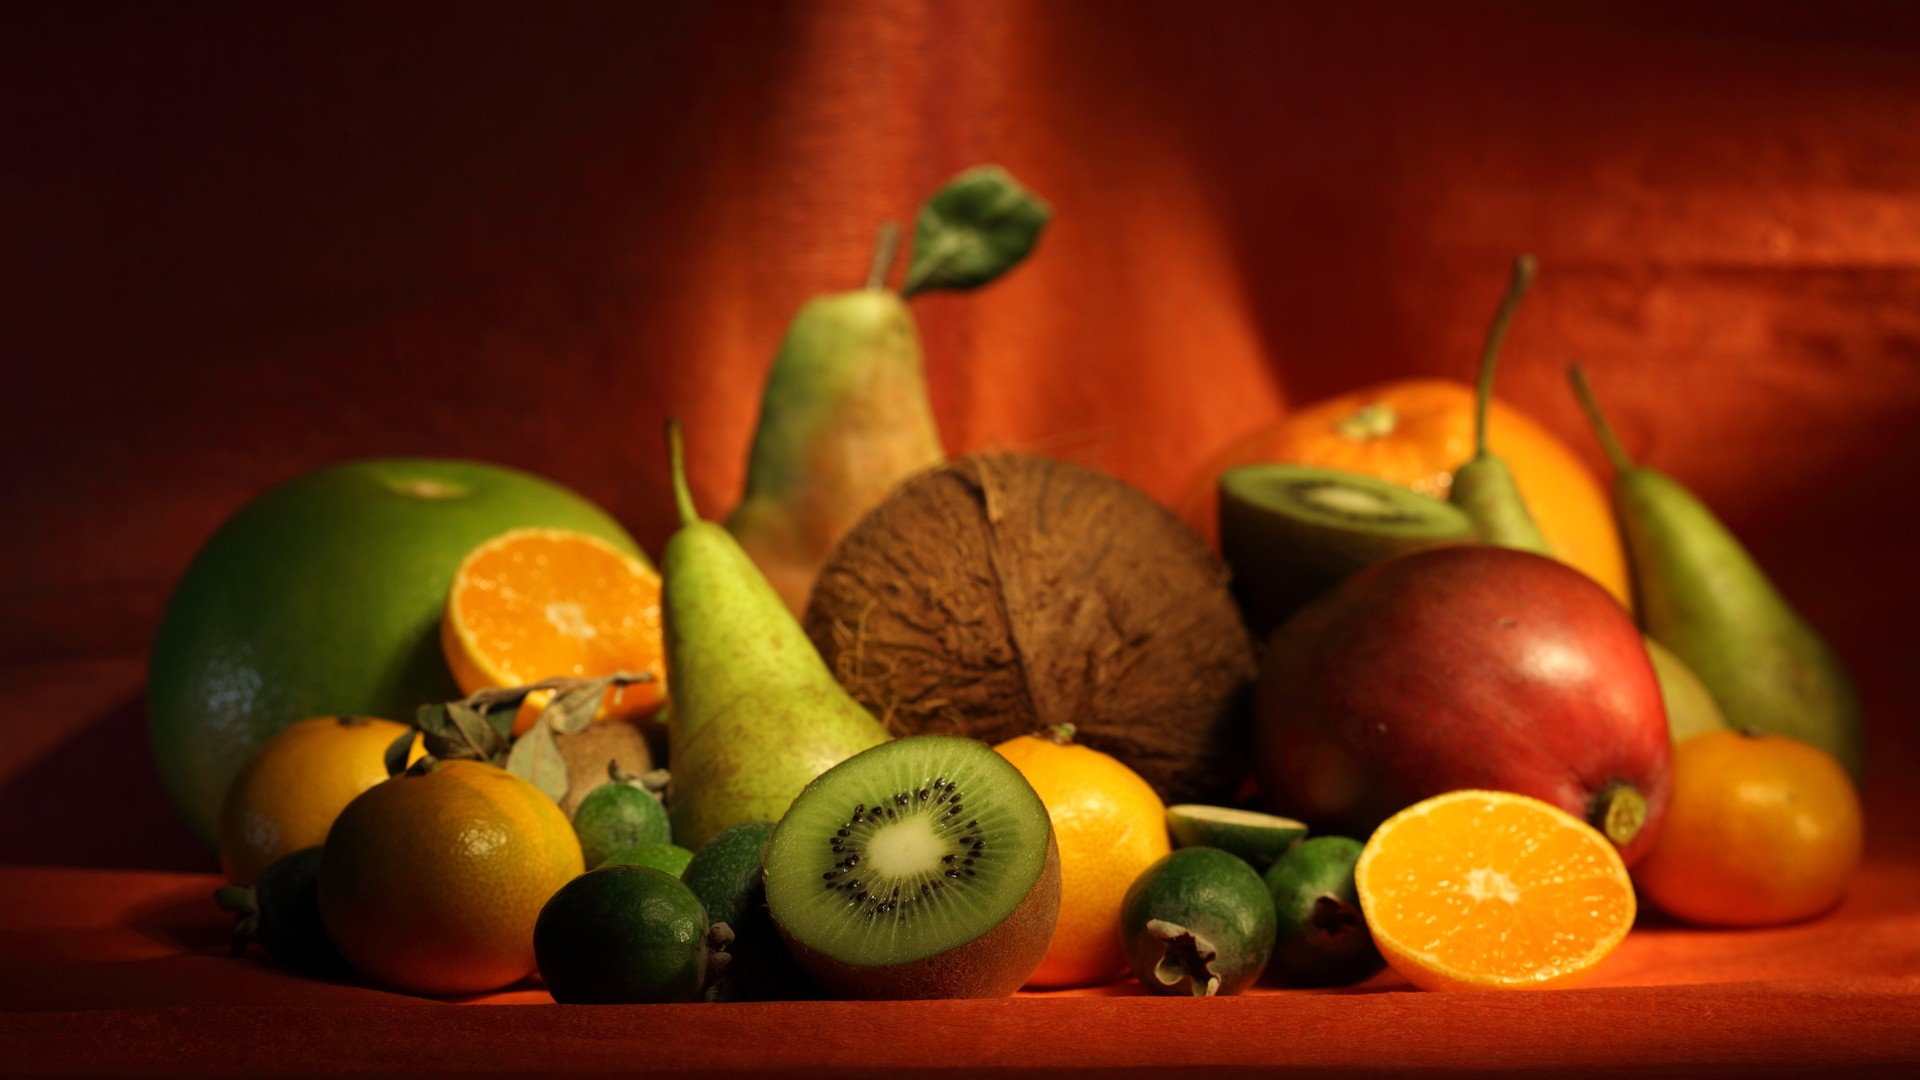 Fruit Kiwi Fruit Still Life Pears Orange Red Warm Colors 1920x1080